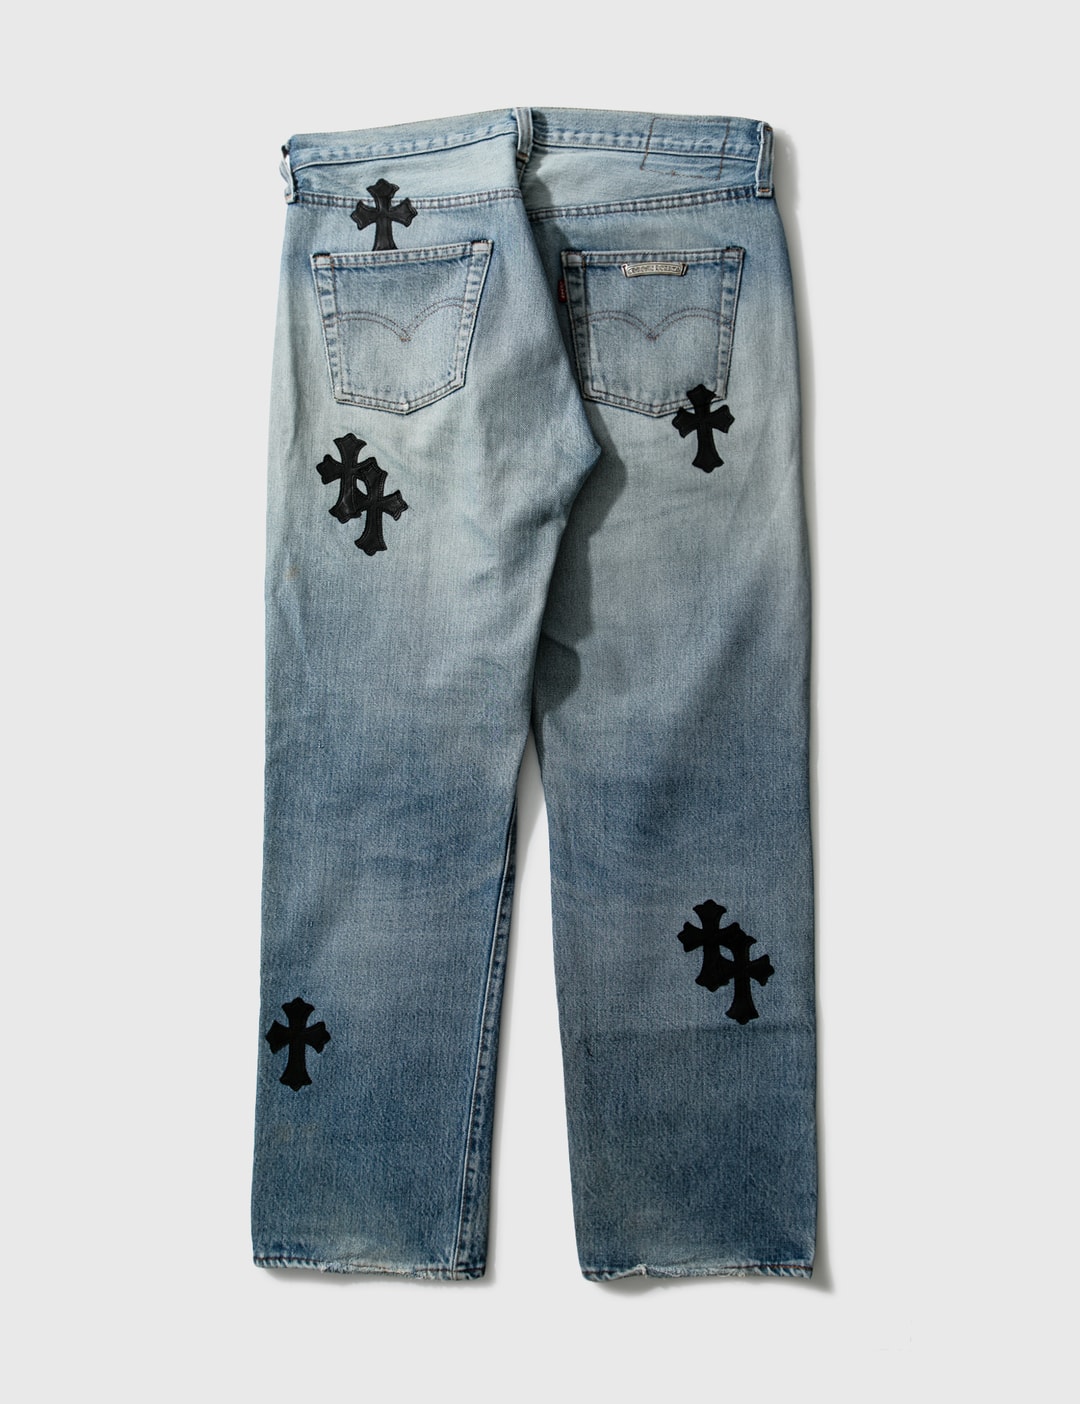 Levi's - Chrome Hearts X Levis Jeans | HBX - HYPEBEAST 為您搜羅全球潮流時尚品牌